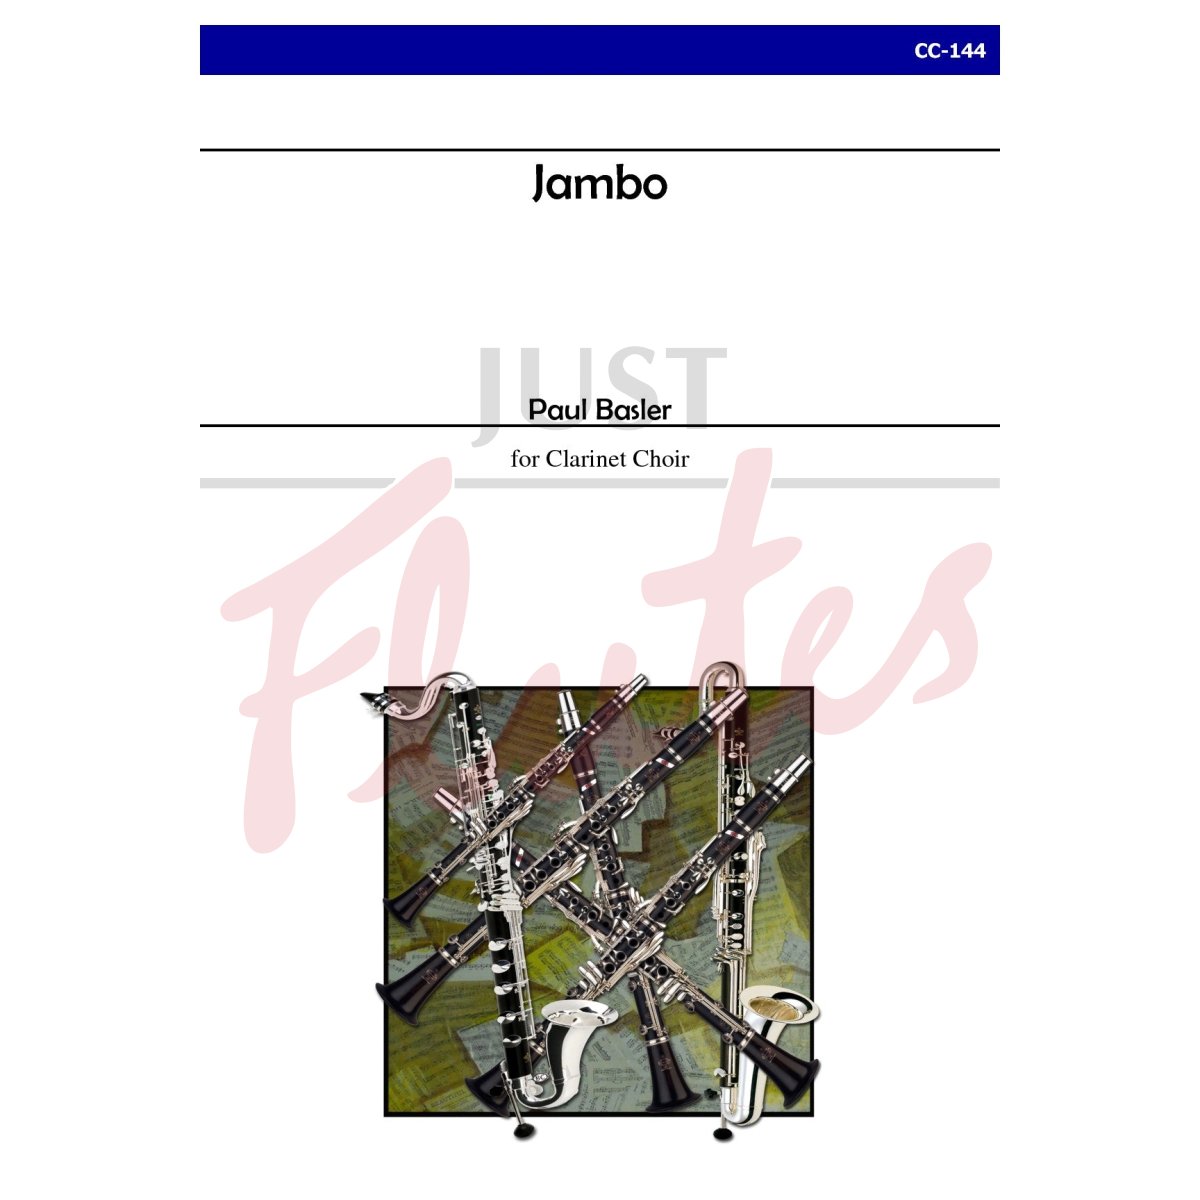 Jambo for Clarinet Choir